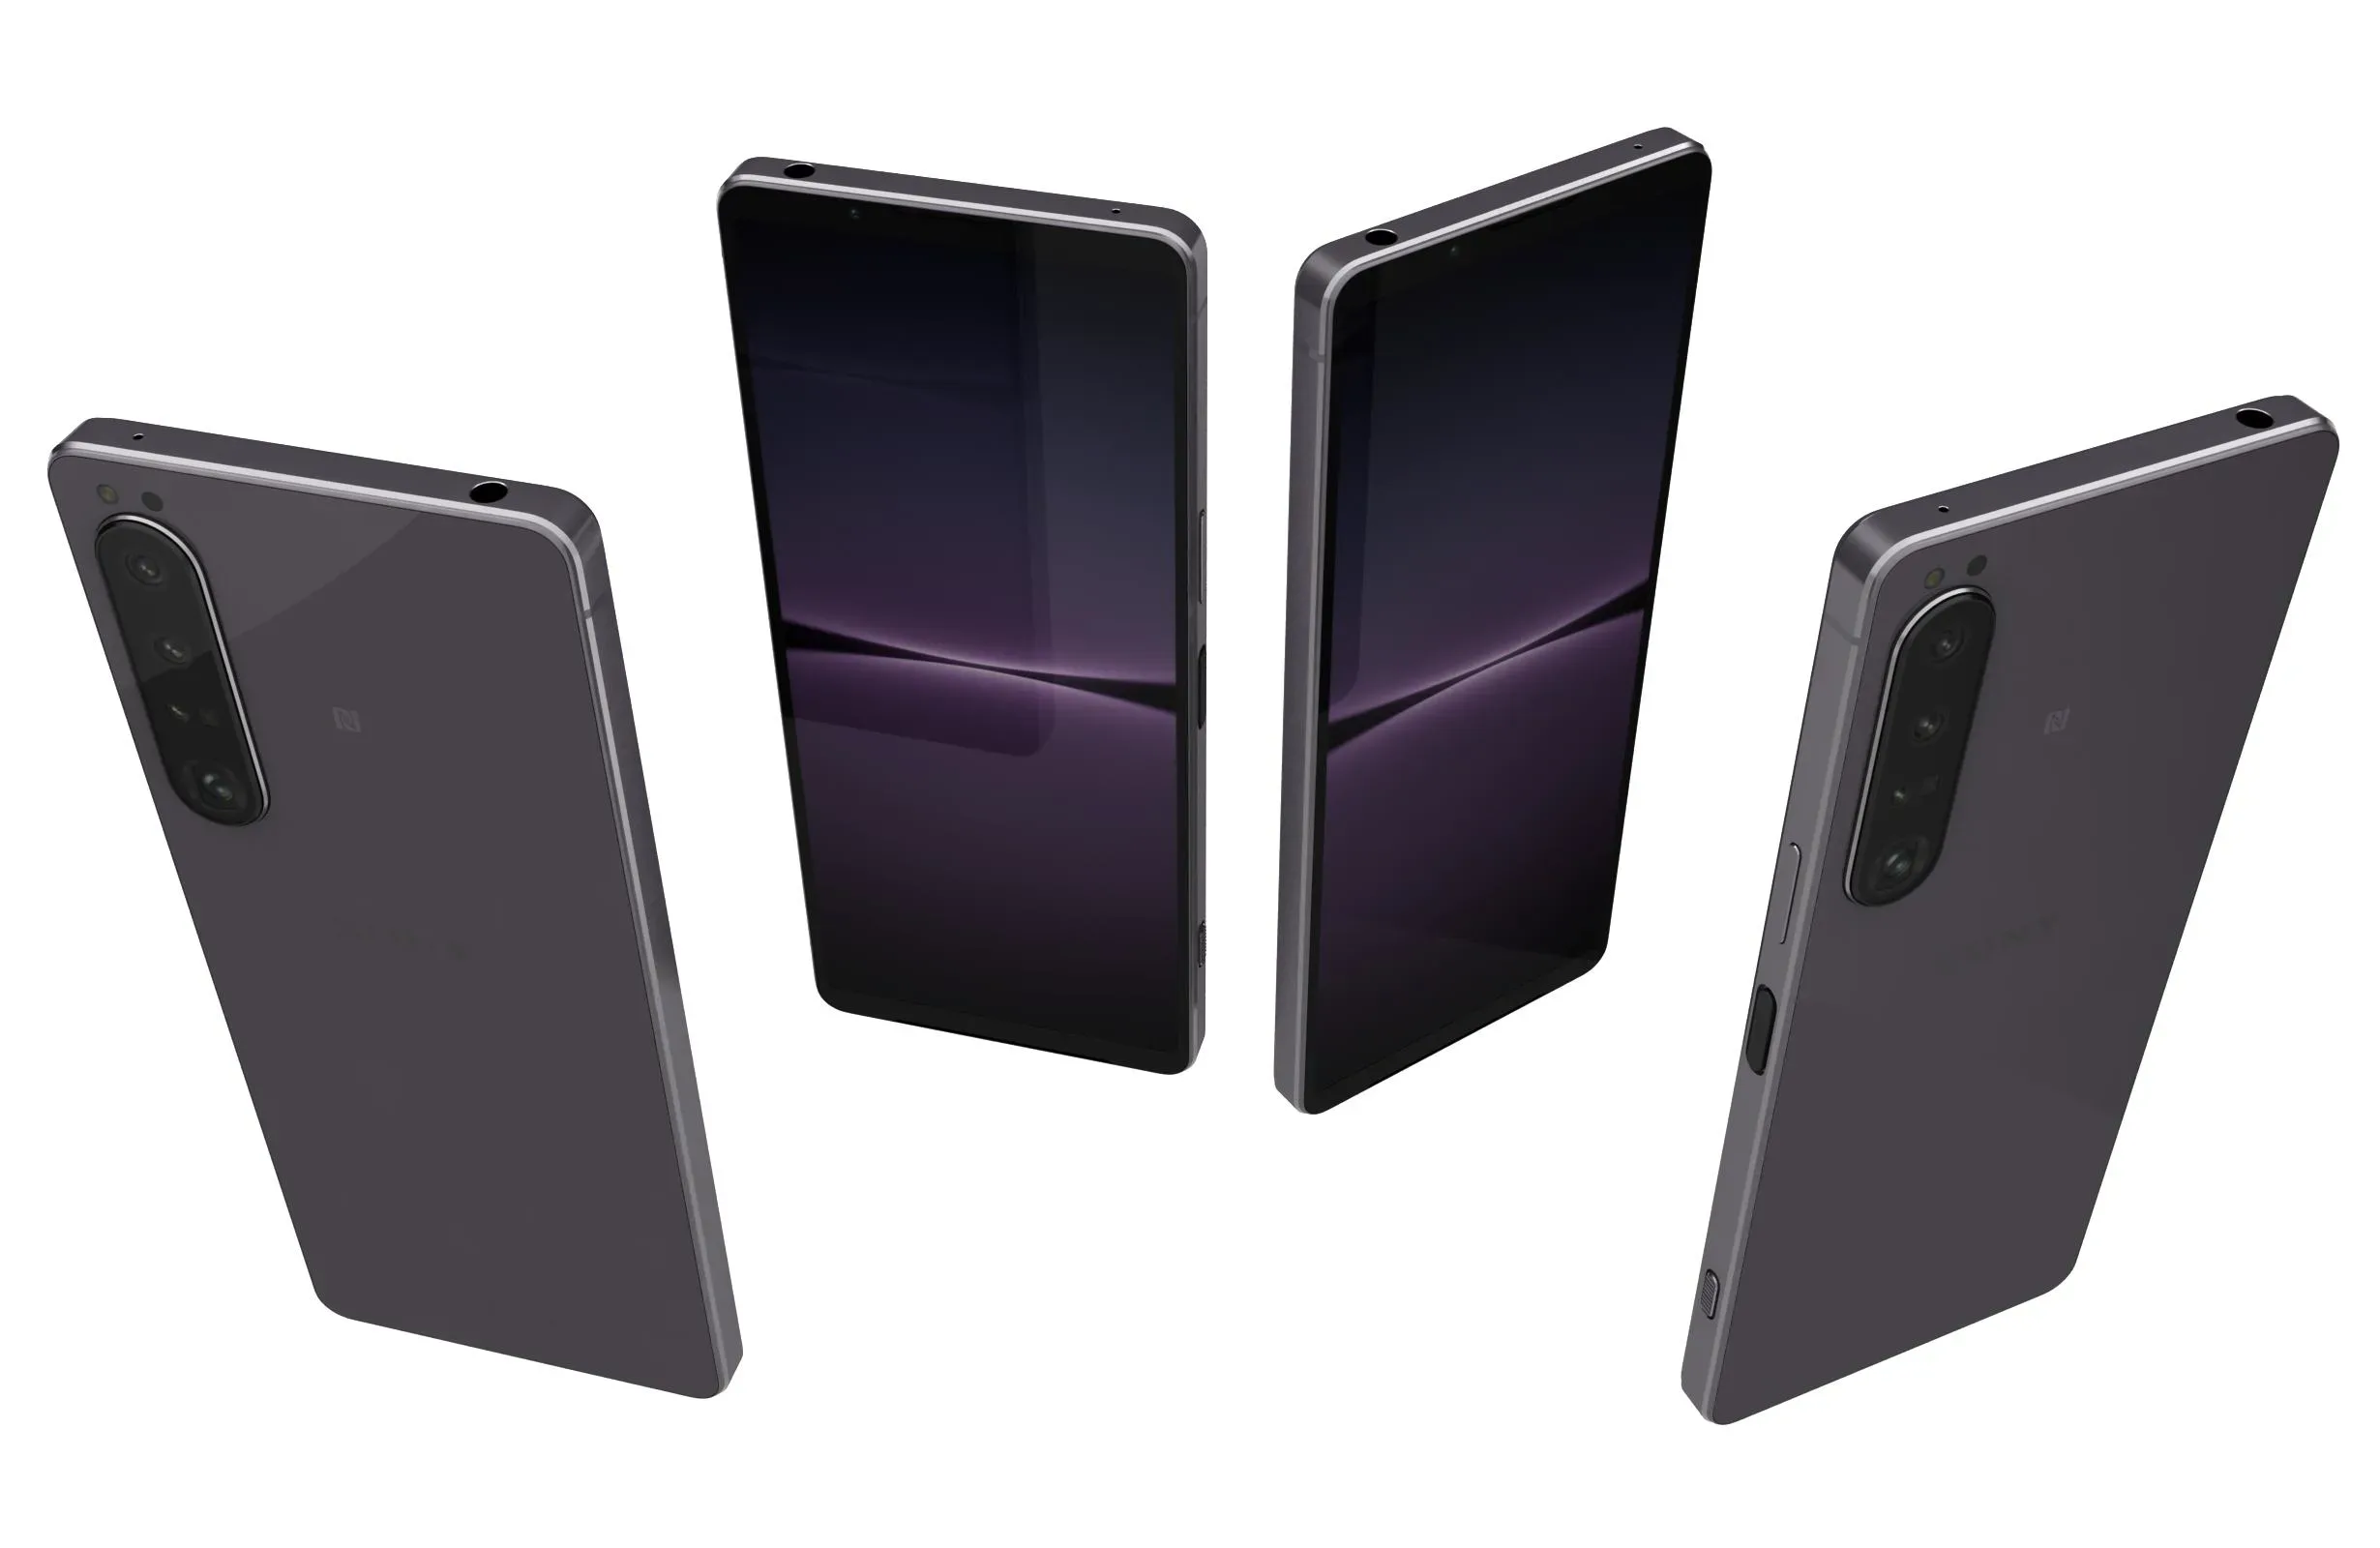 Sony Xperia 1 IV Purple